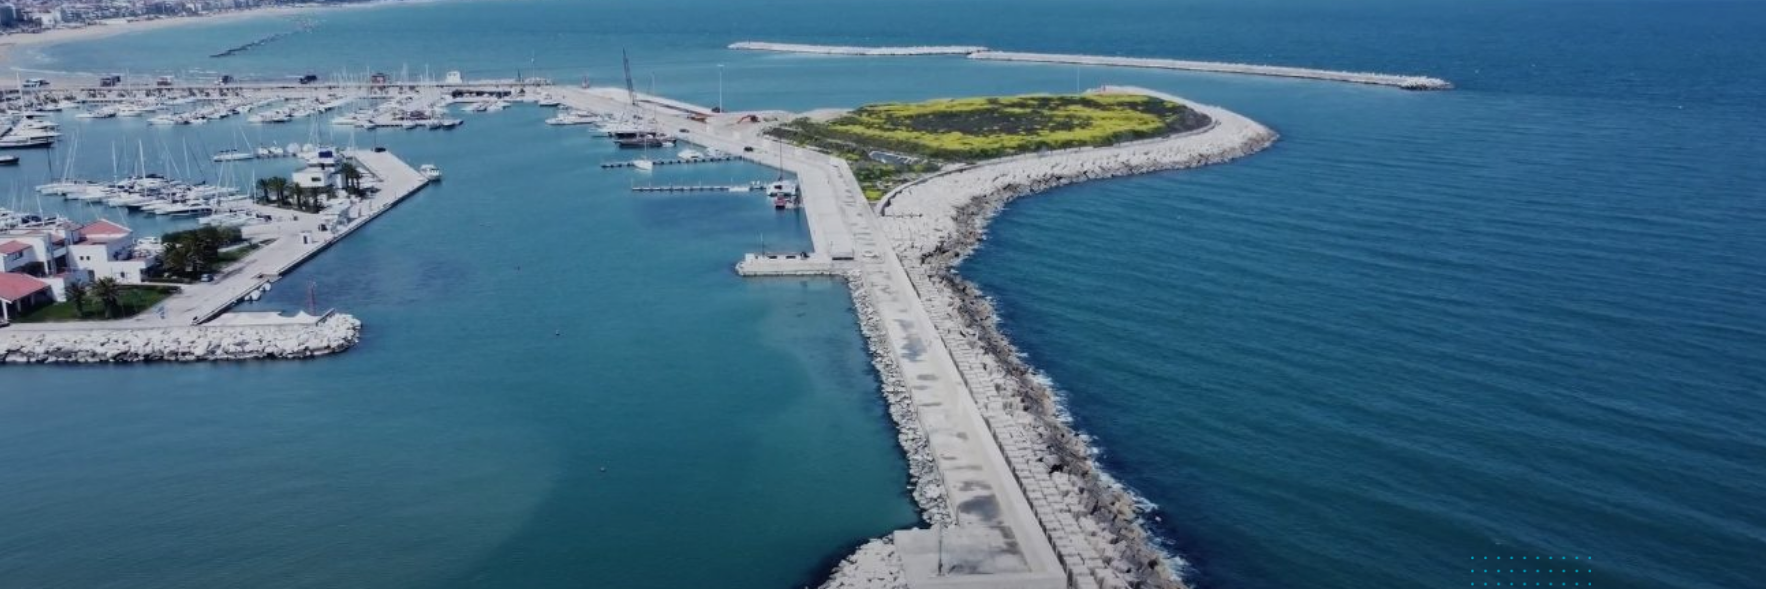 Marina di Pescara - Wave energy for a tourist harbour